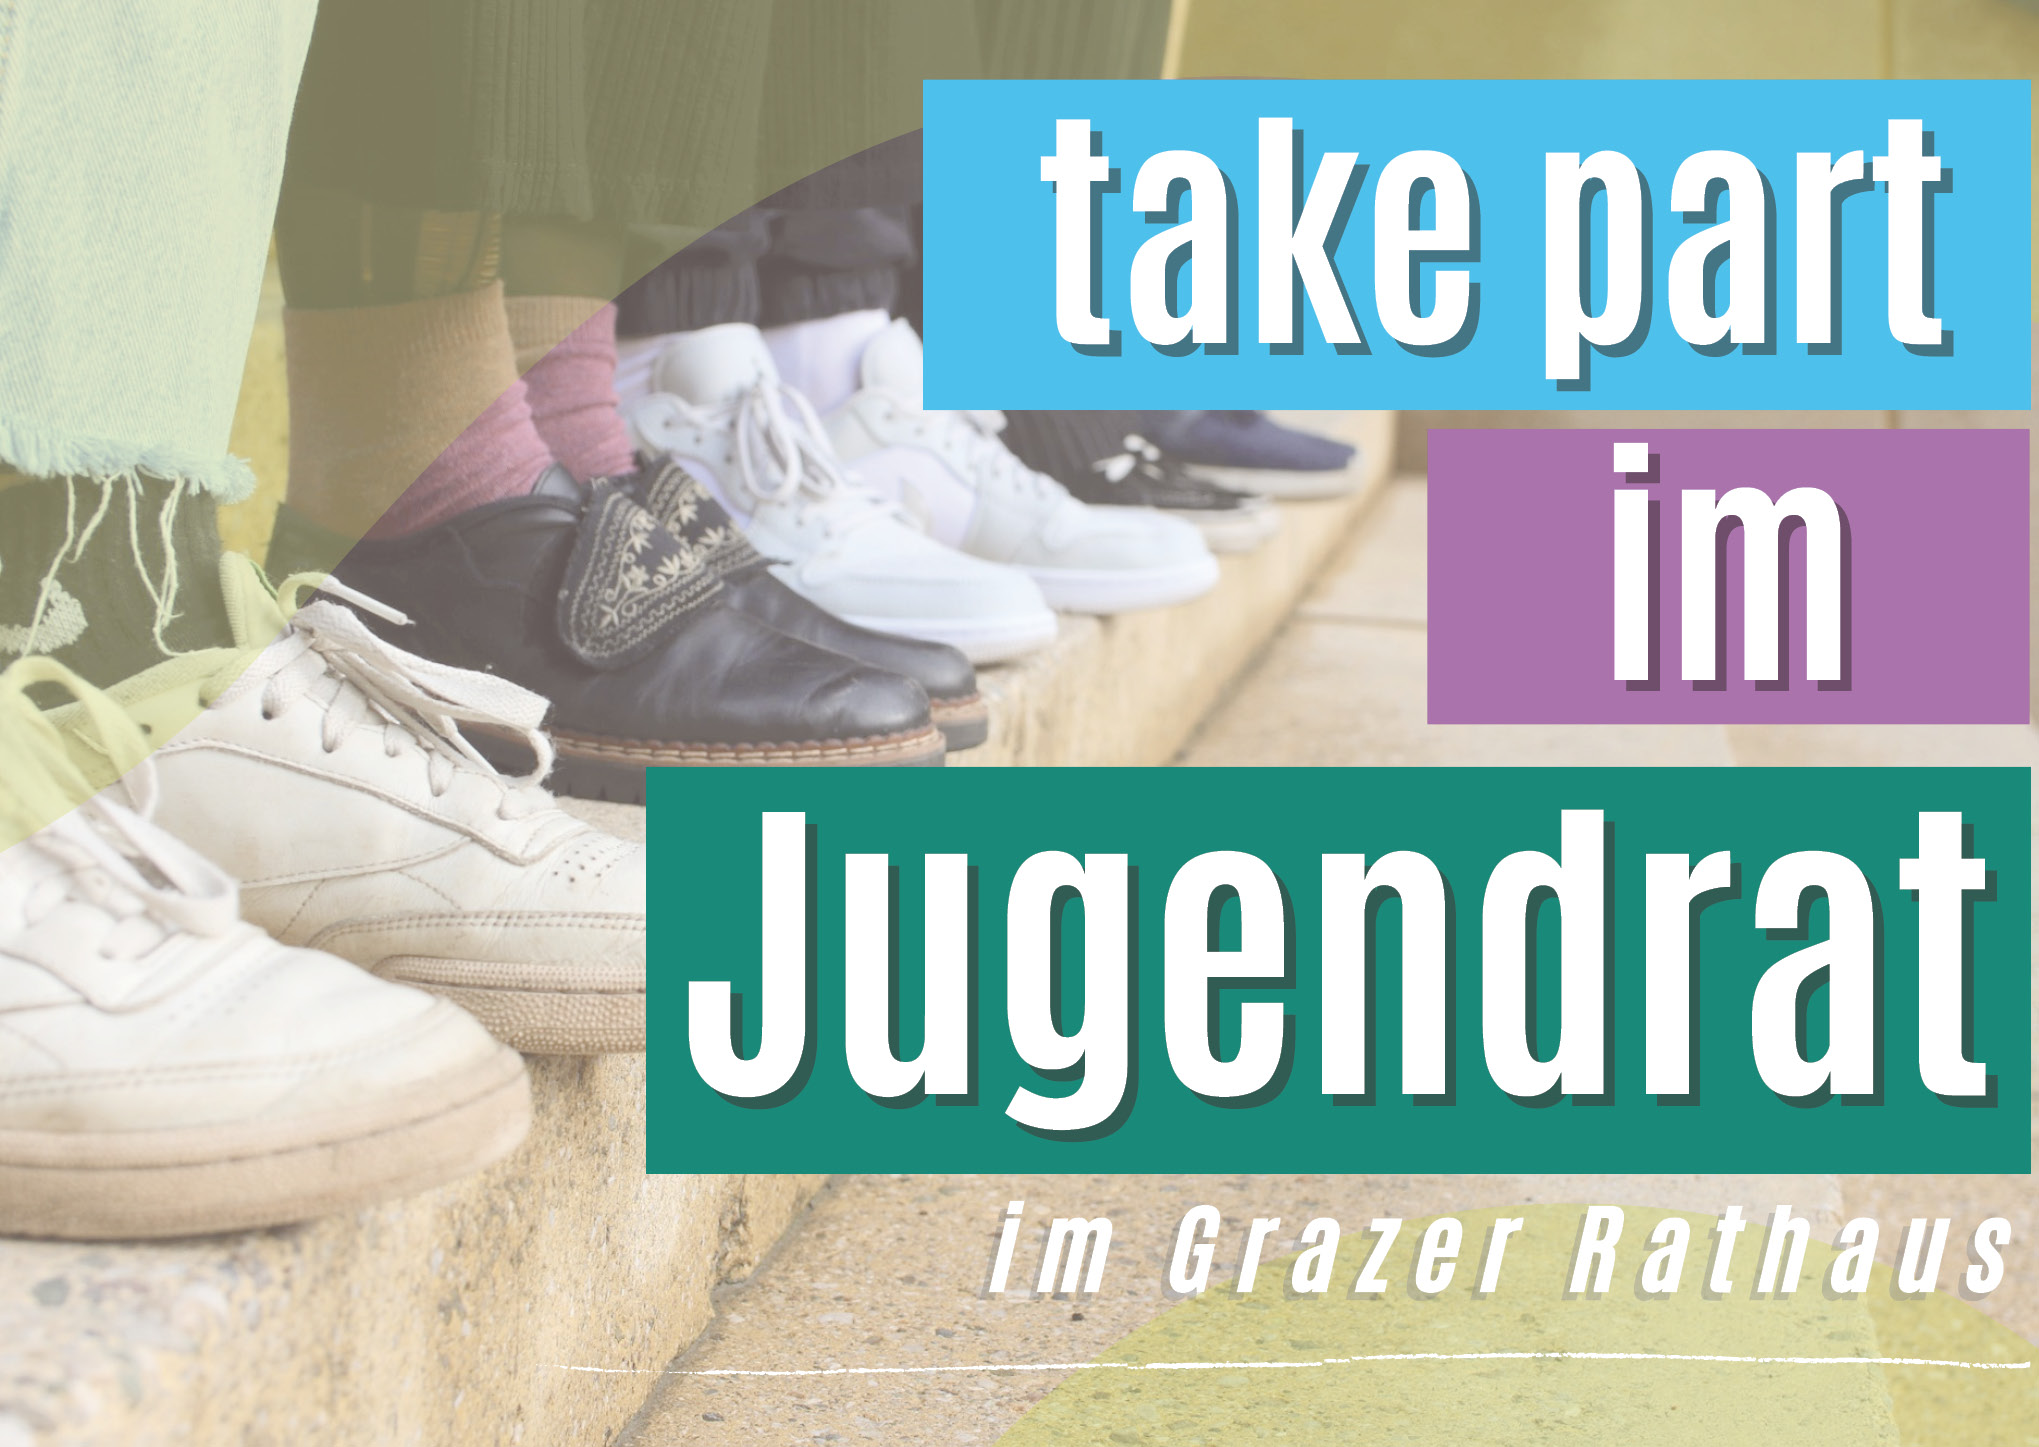 take part im Jugendrat:  Kick off-Veranstaltung am 6. Dezember